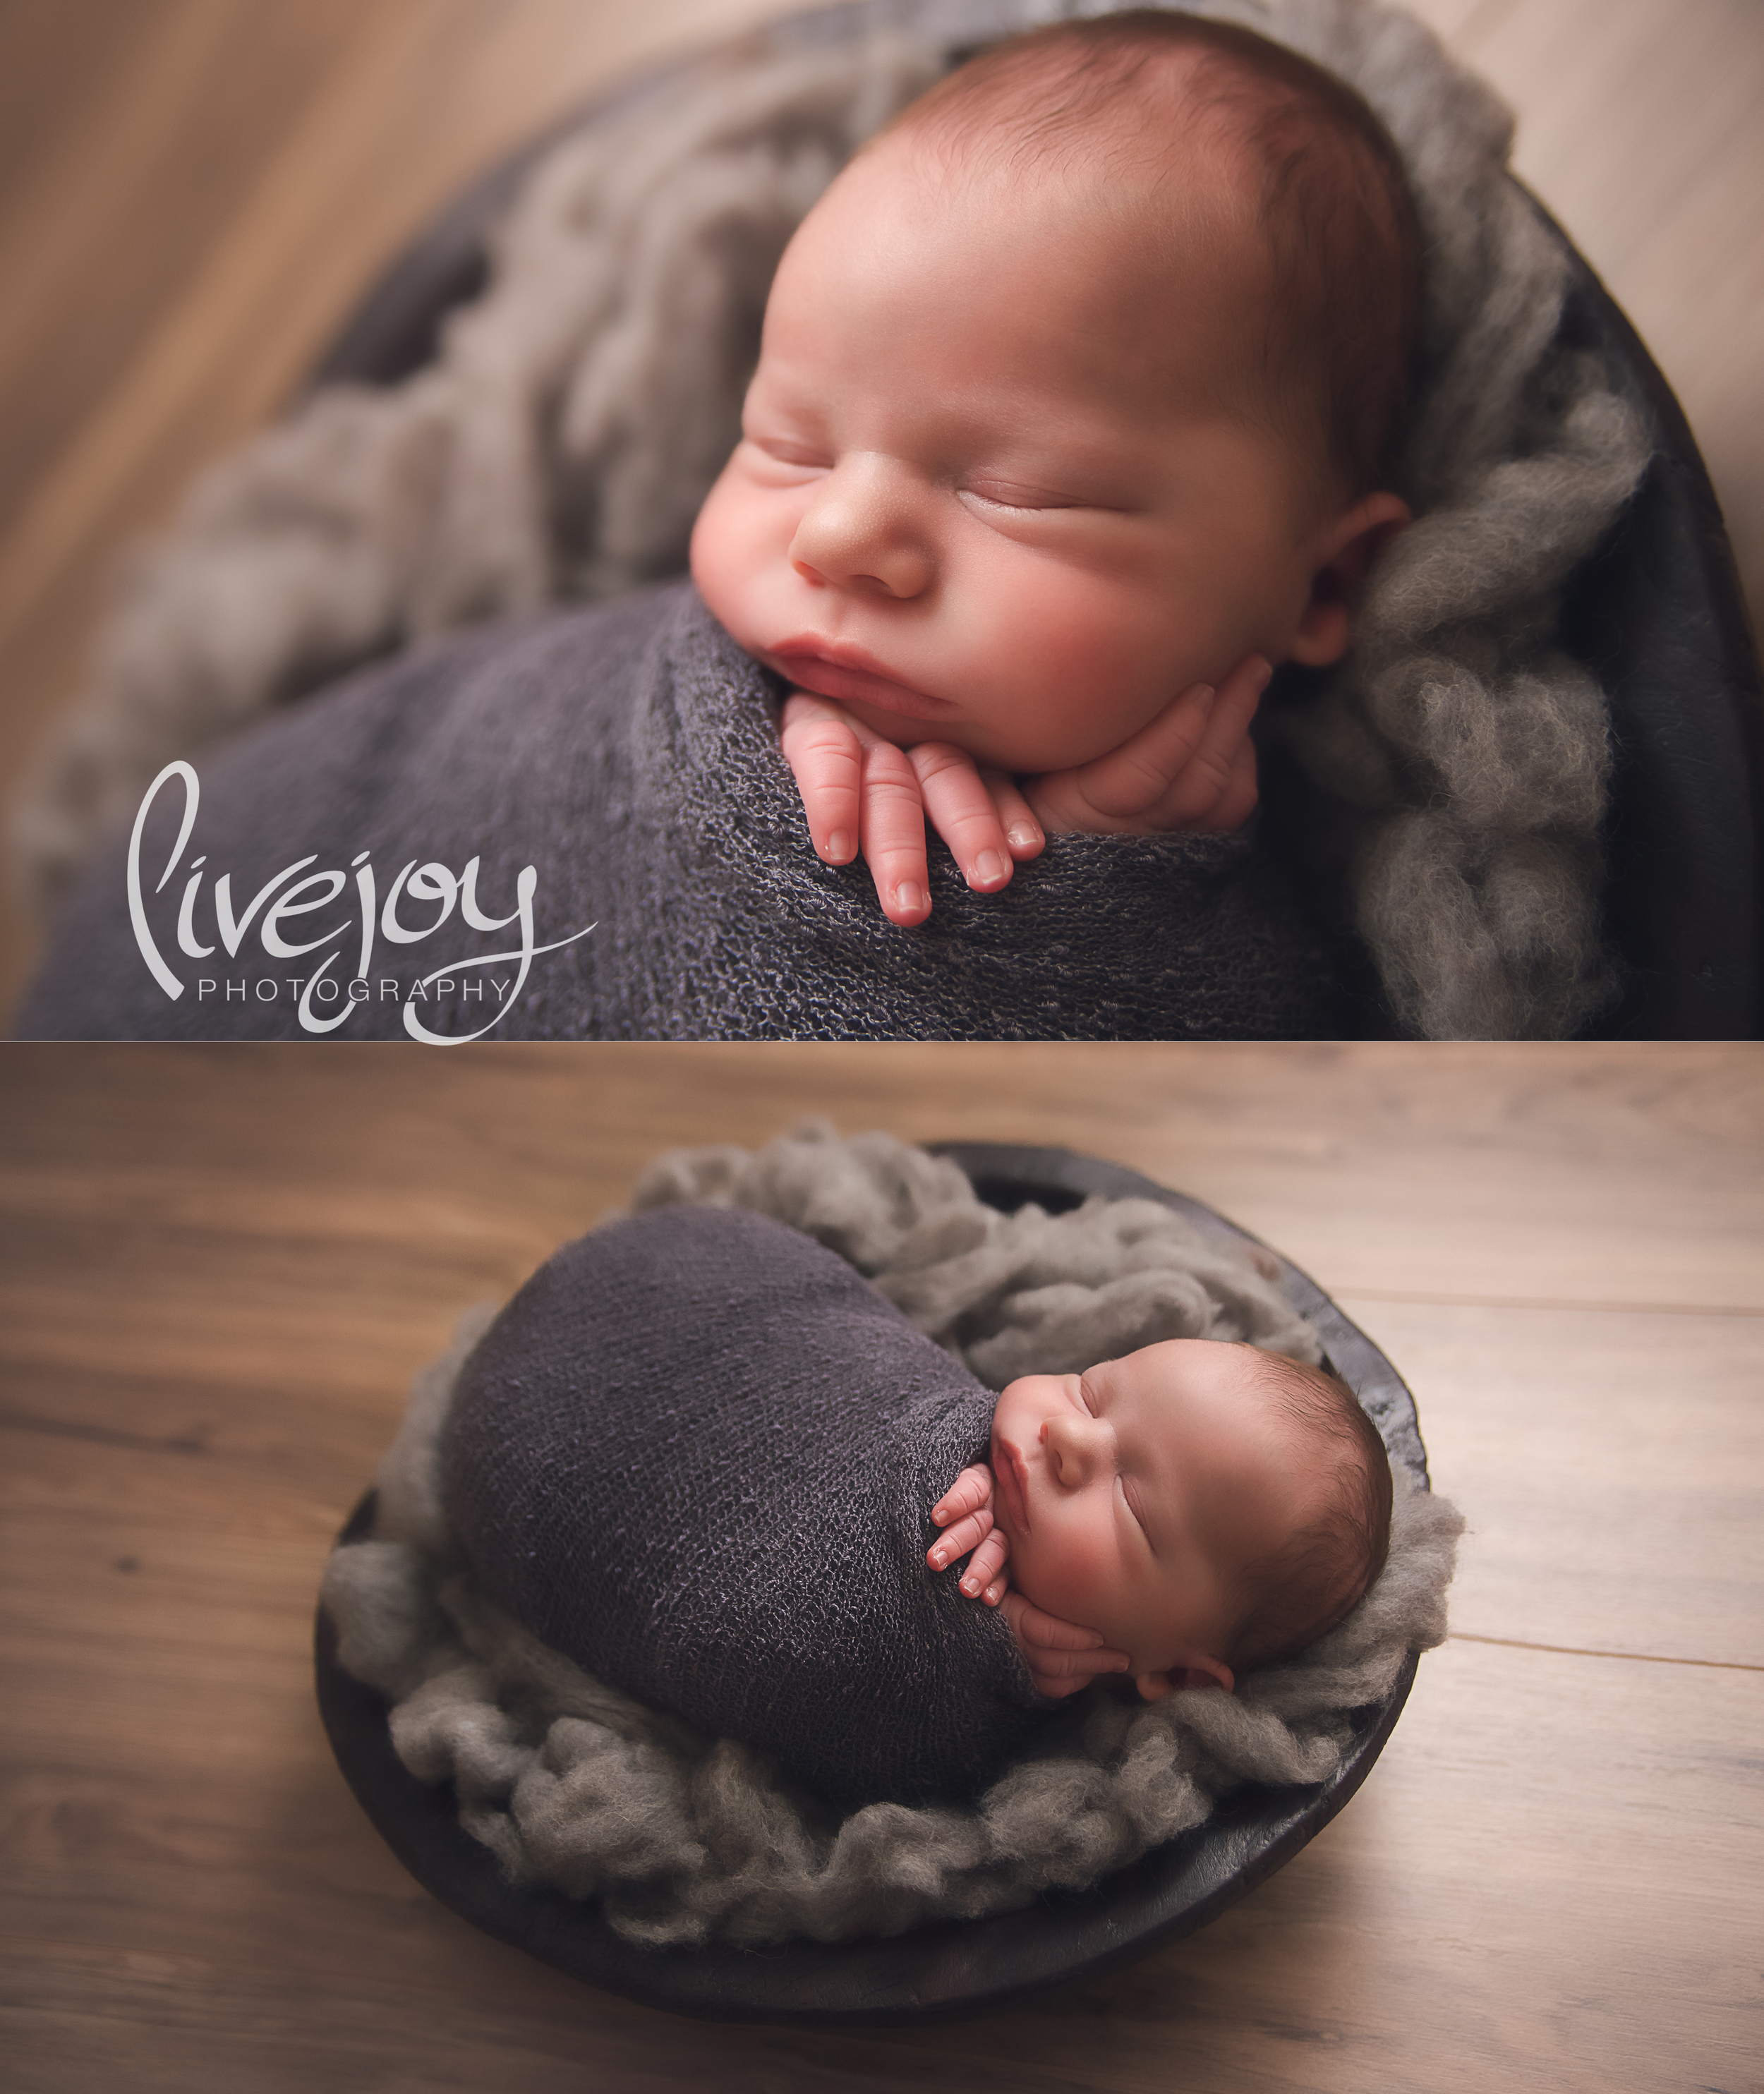 Newborn Photography - LiveJoy Photography - Oregon